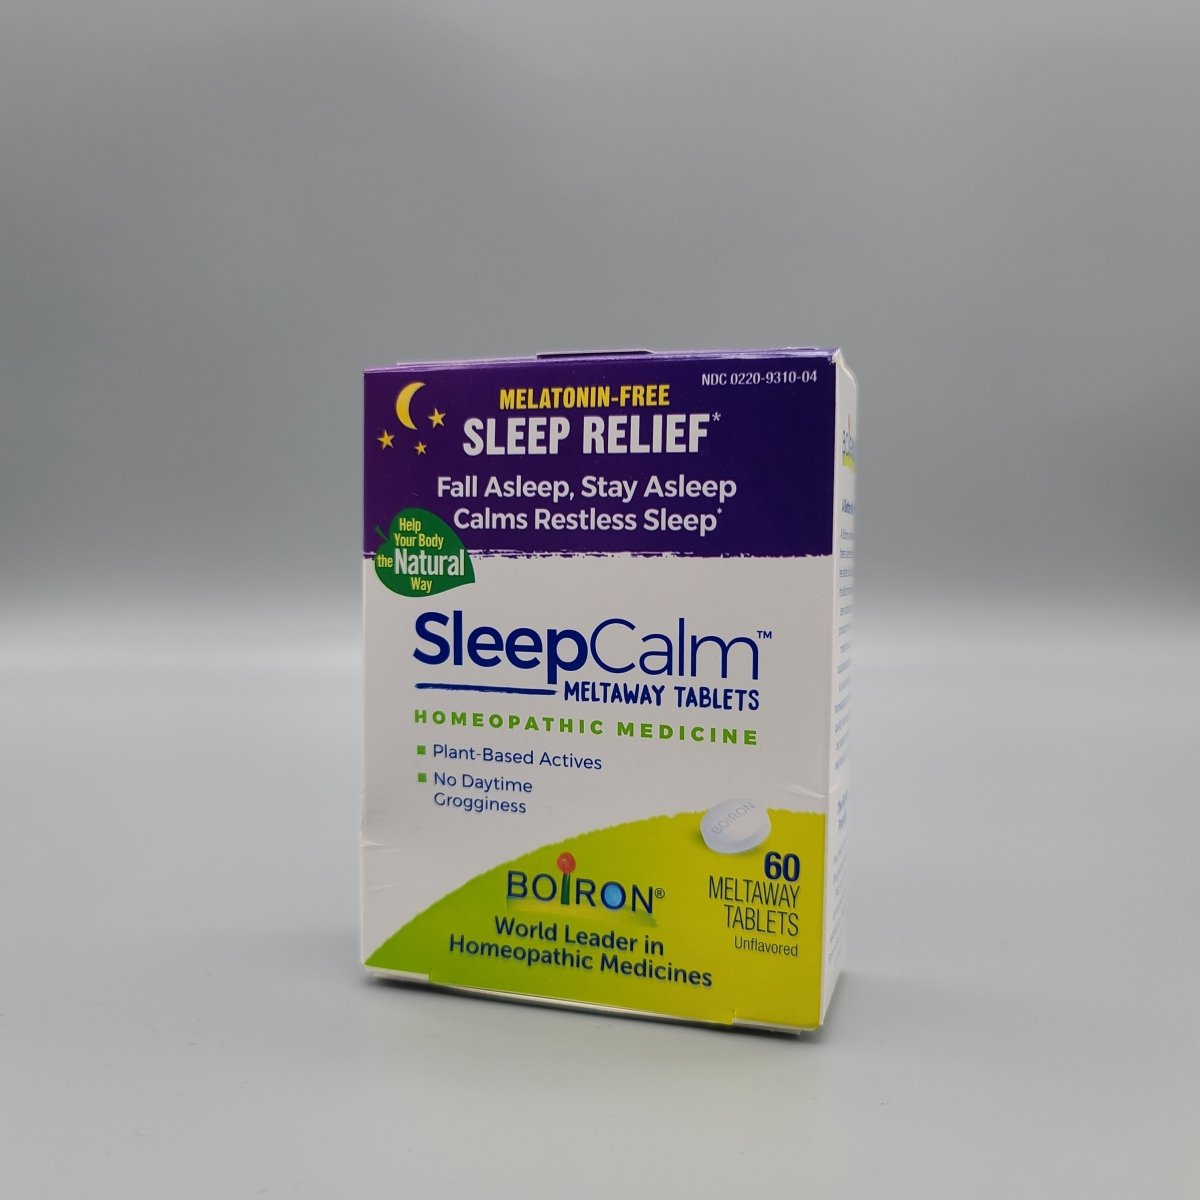 SleepCalm - Sleep Relief - 60 Meltaway Tablets Unflavored